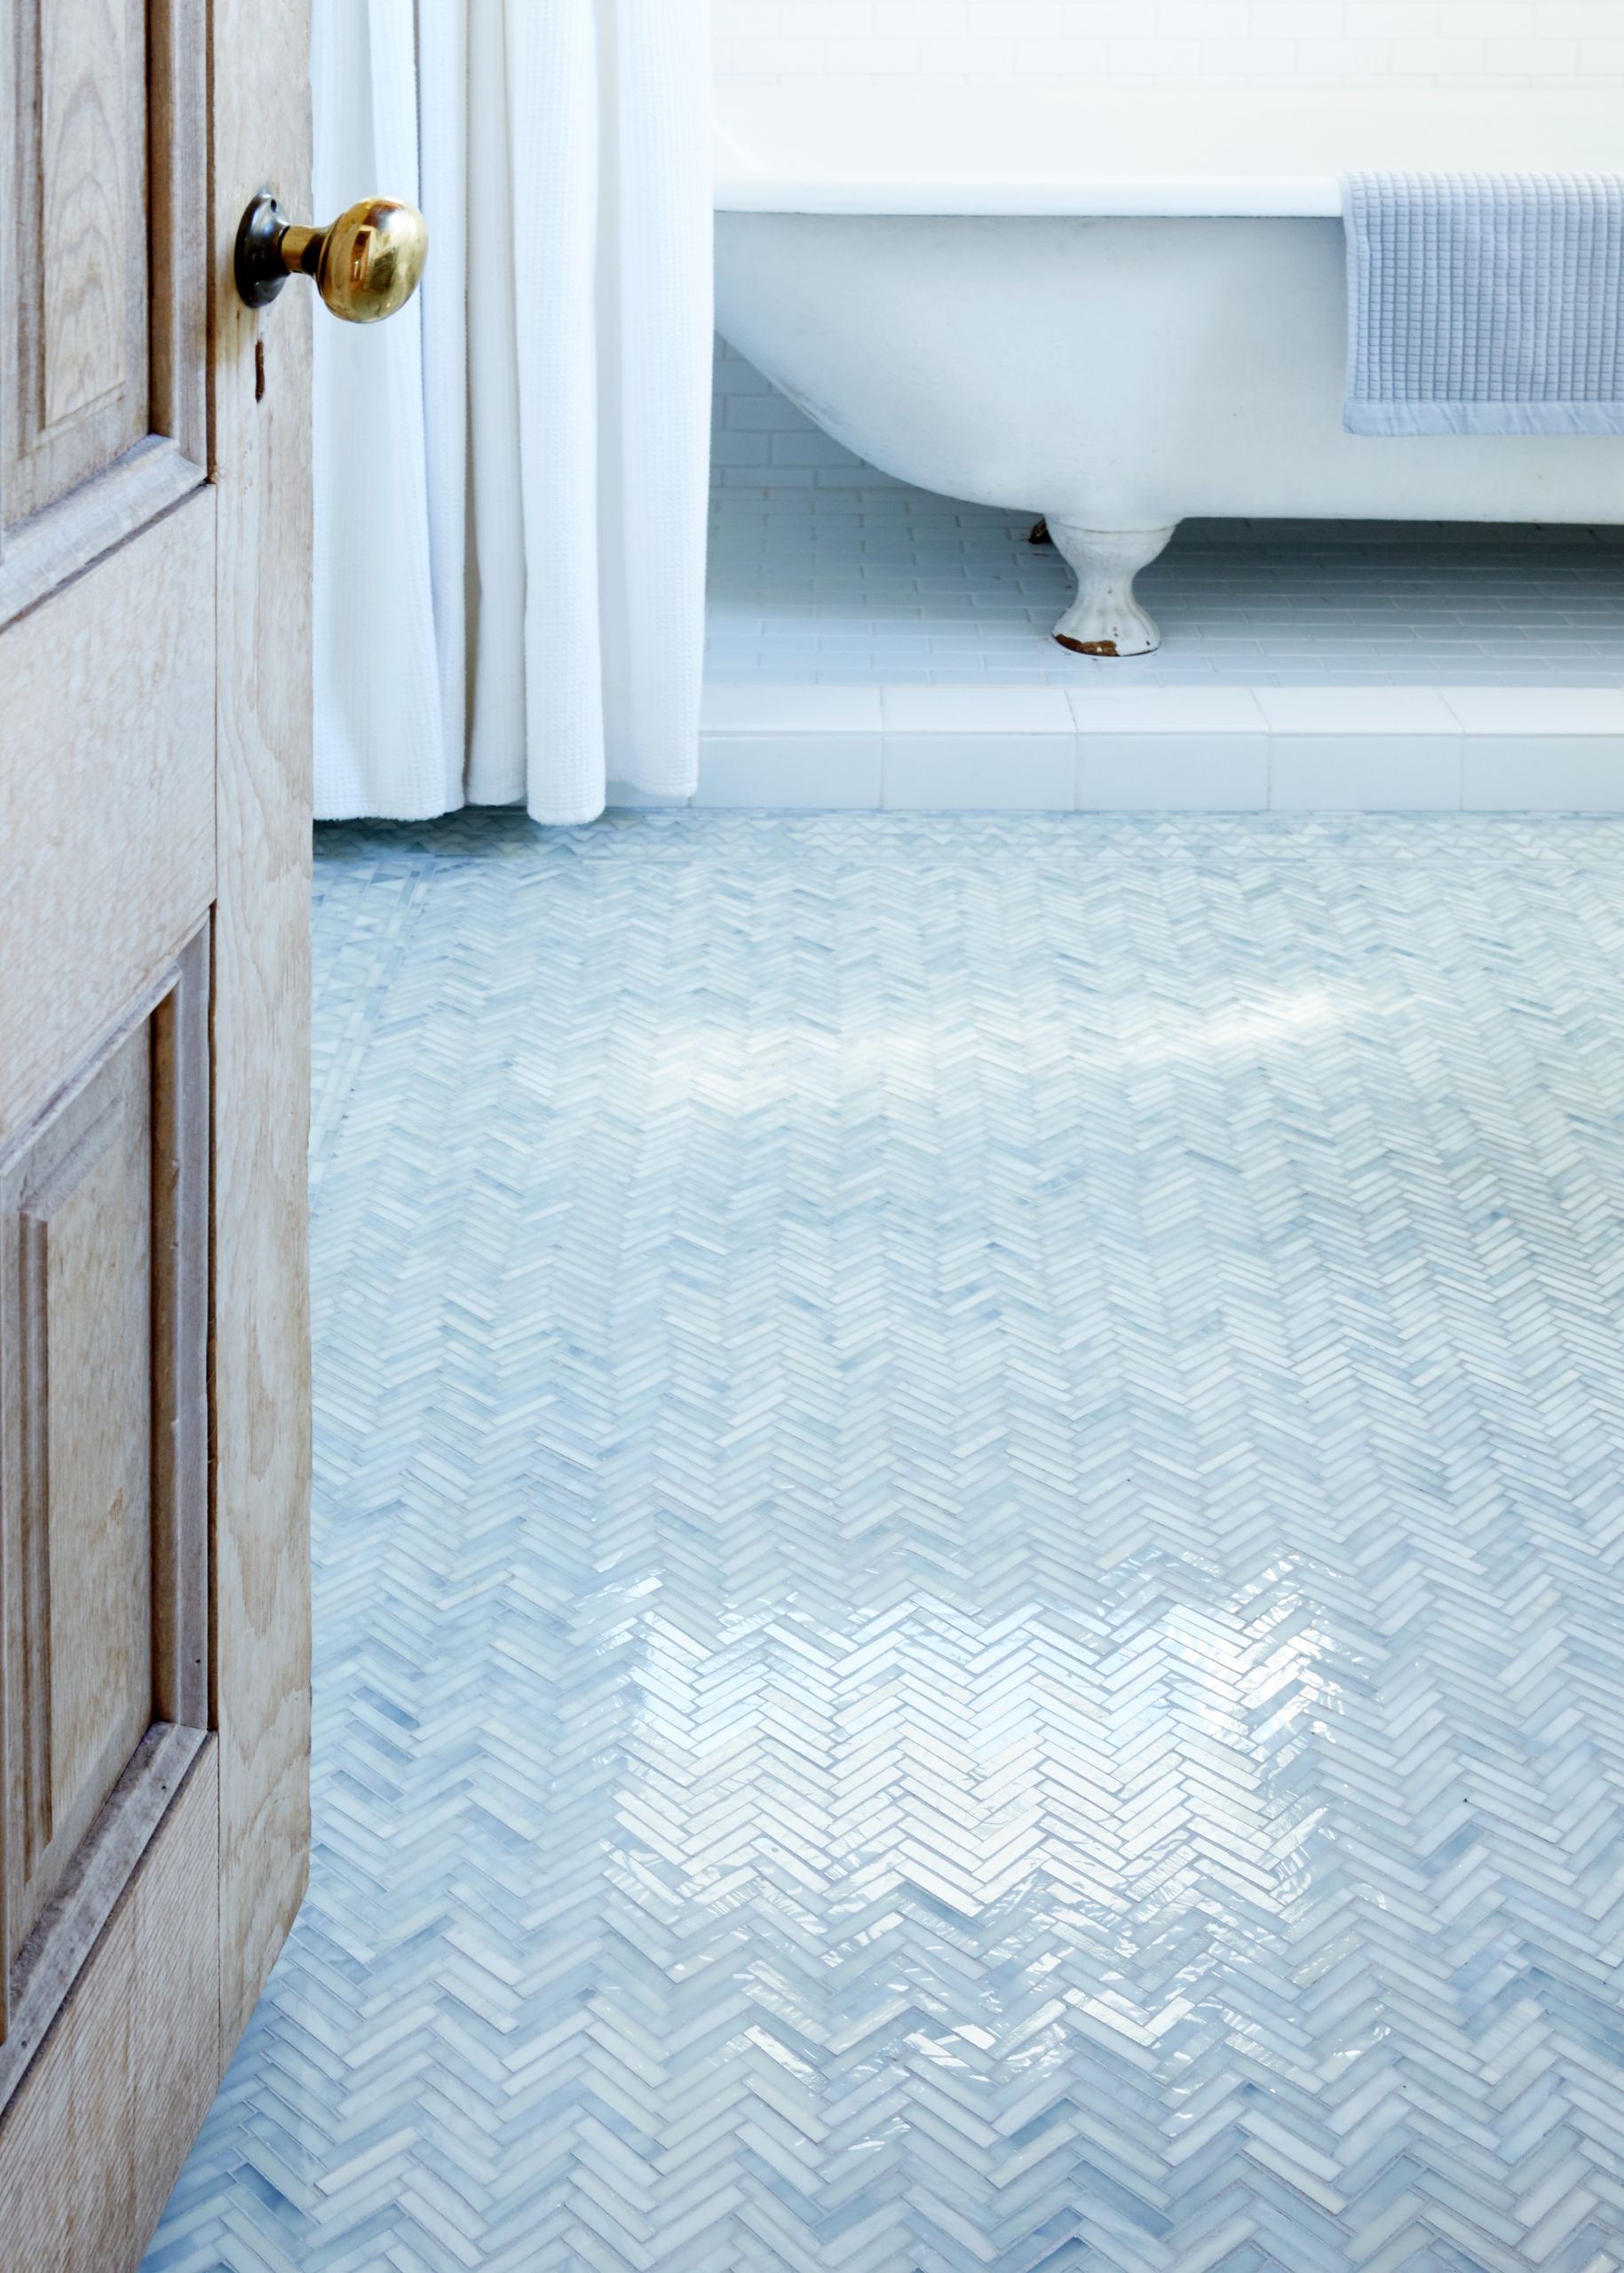 Glass Tile Bathroom Floor
 Bathroom of the Week An Artist Made Mosaic Tile Floor